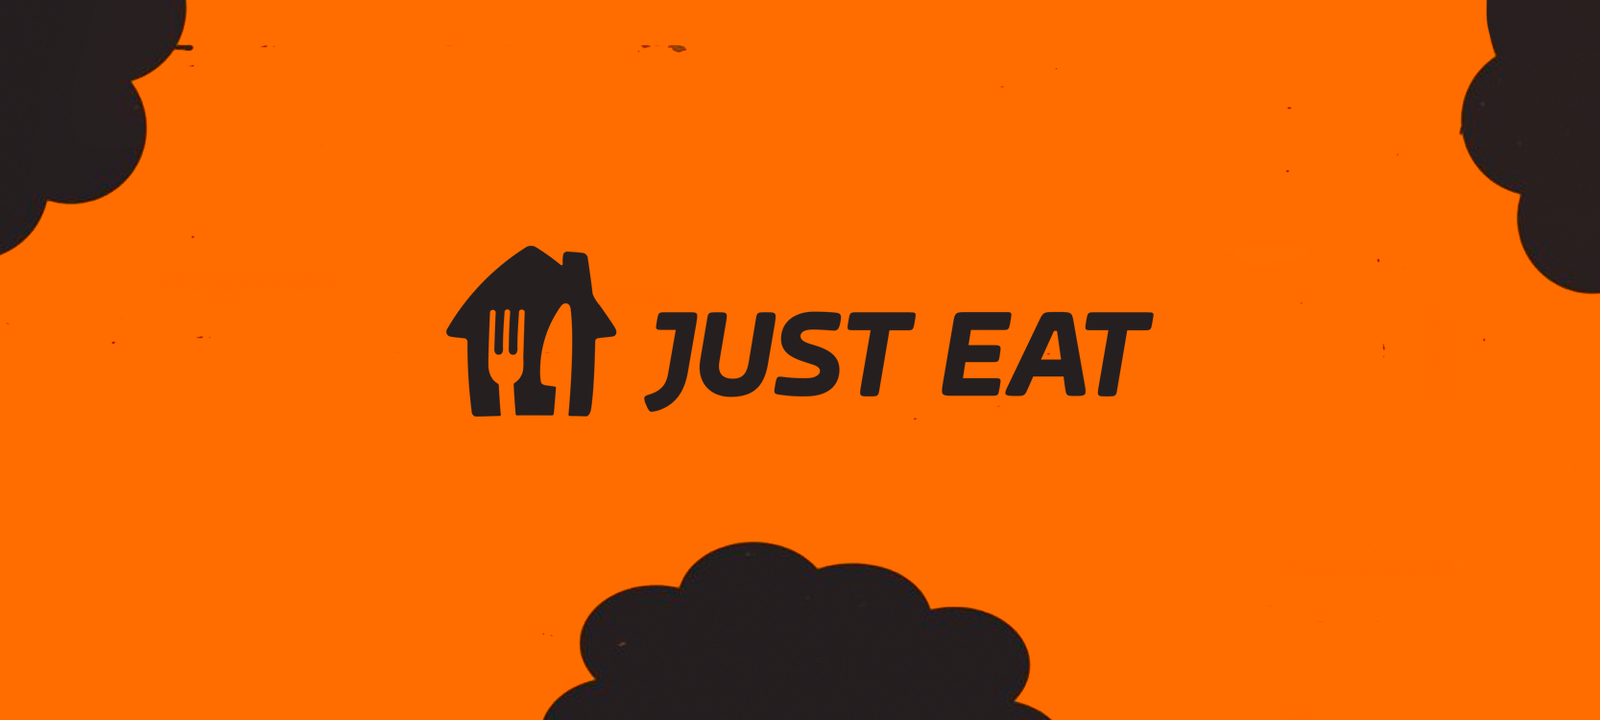 Just eat logo